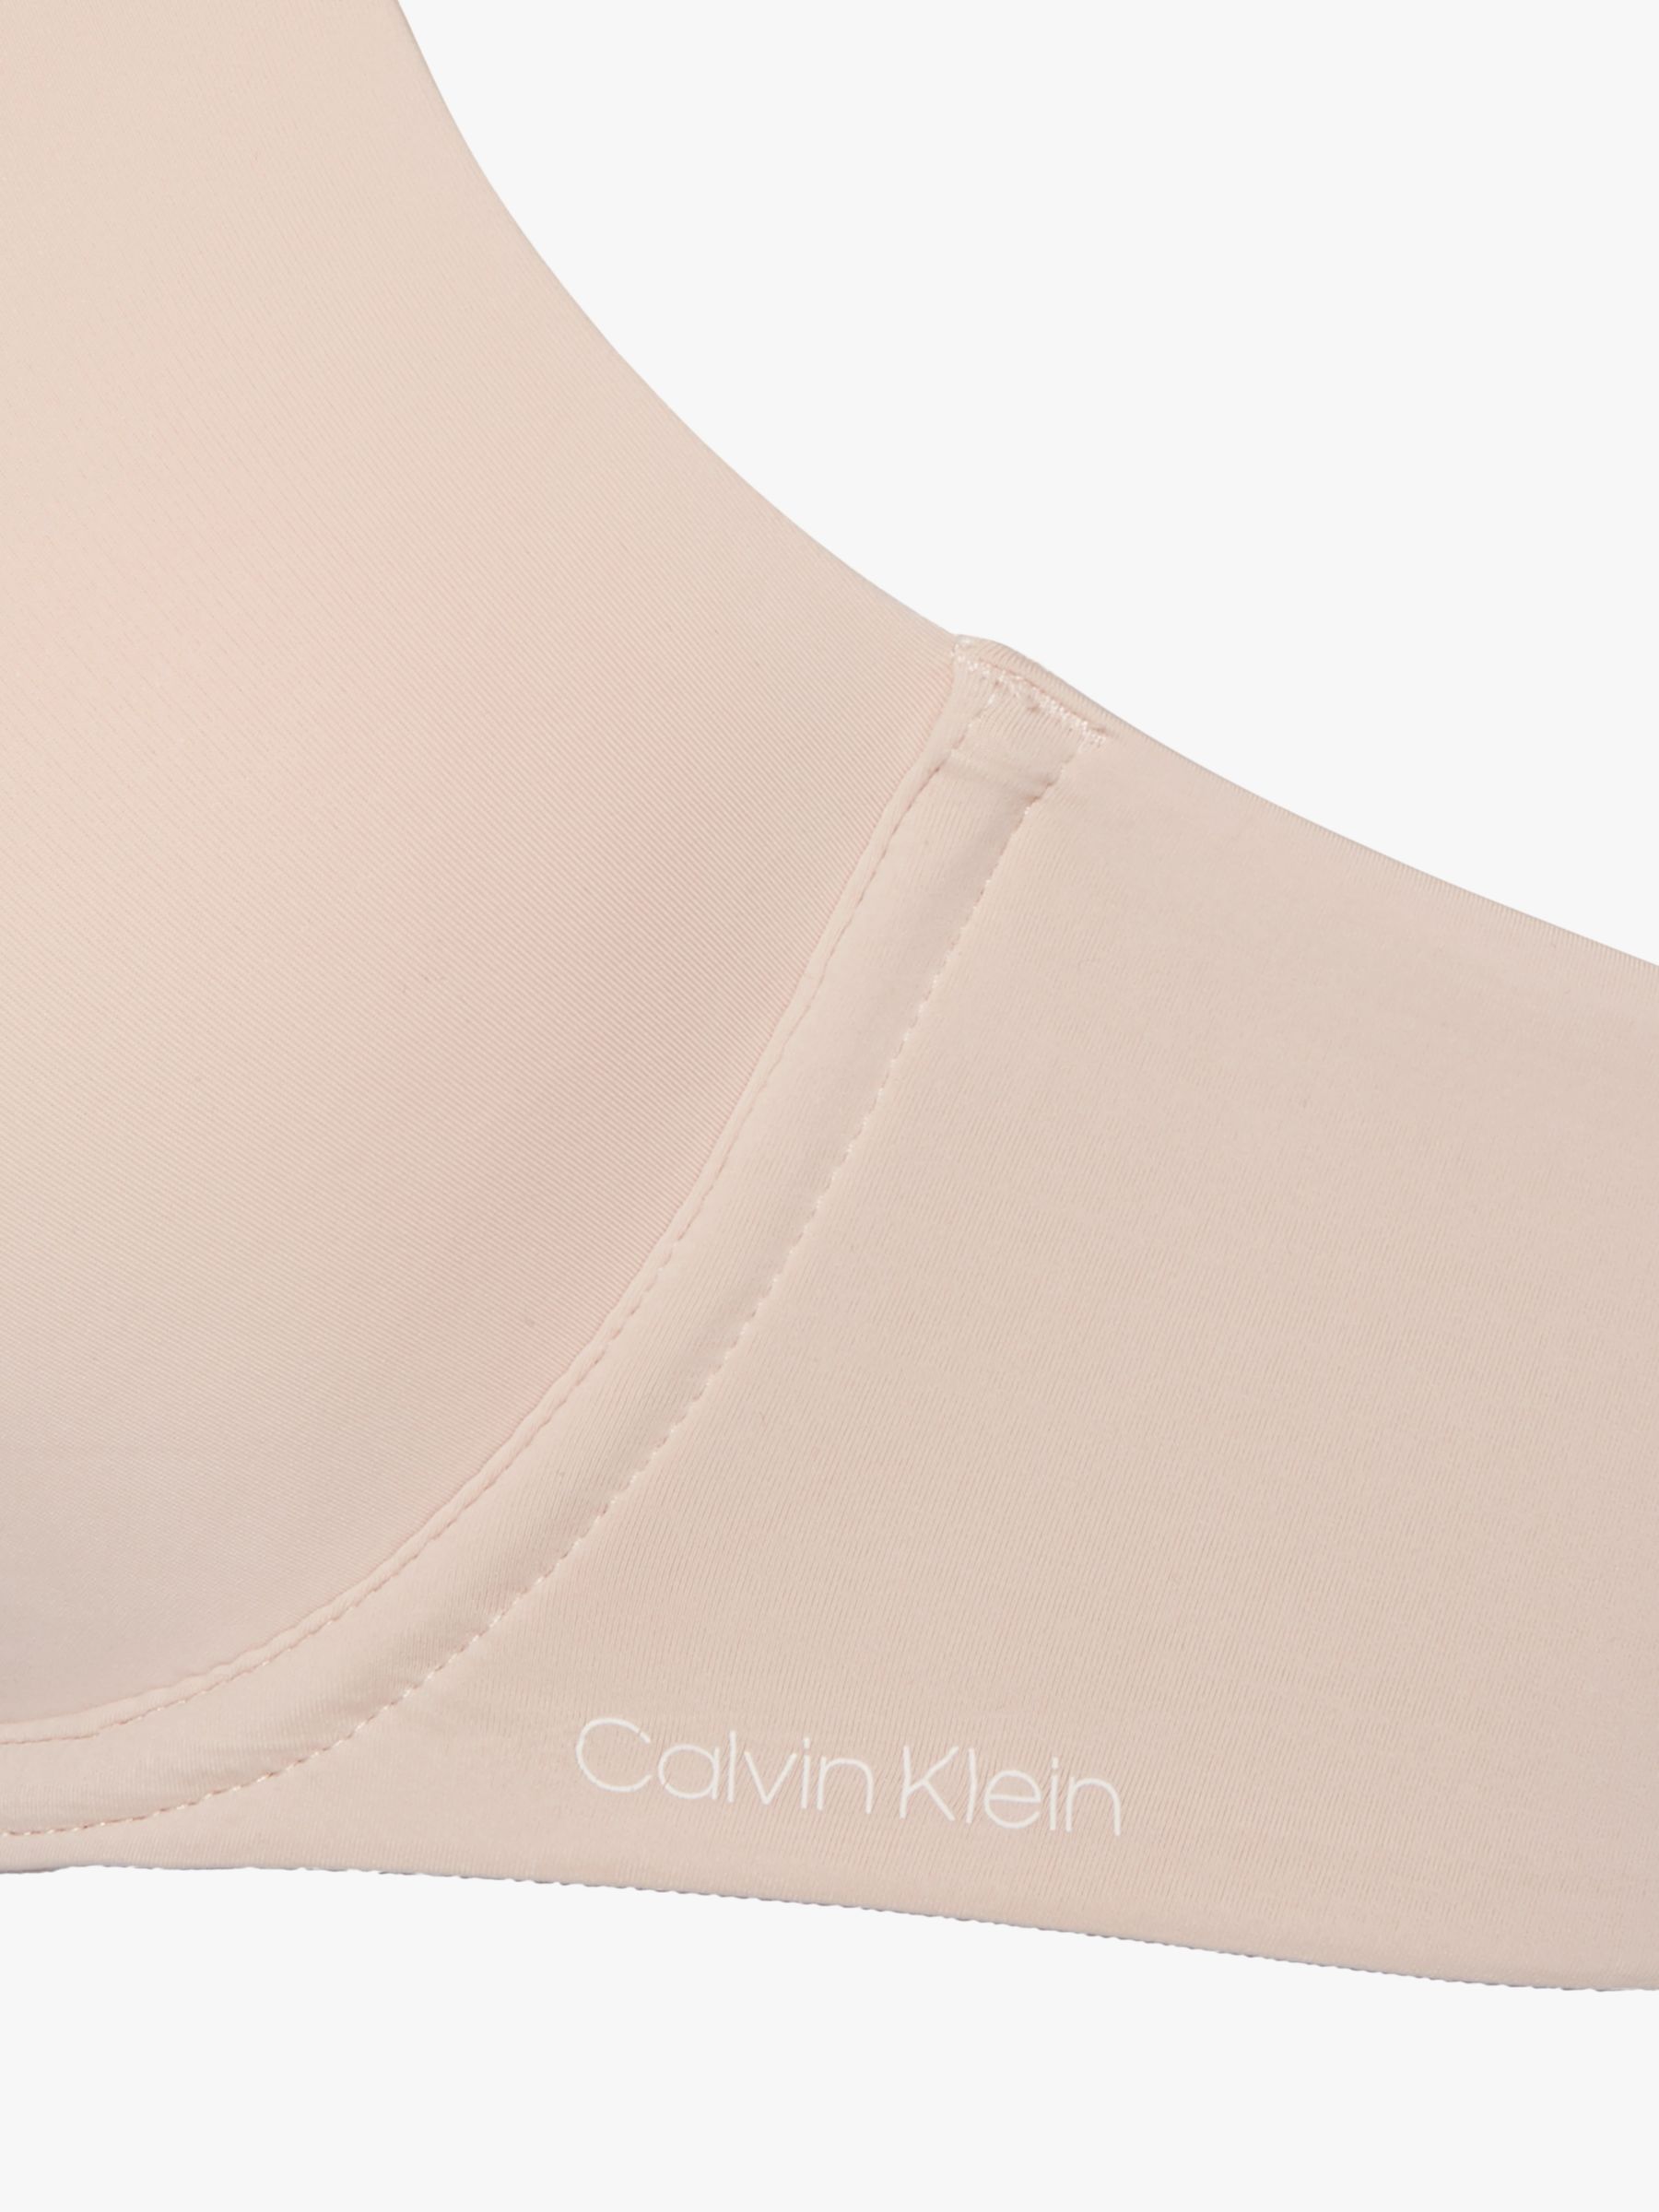 Calvin Klein Seductive Comfort Lift Demi Bra, Black at John Lewis